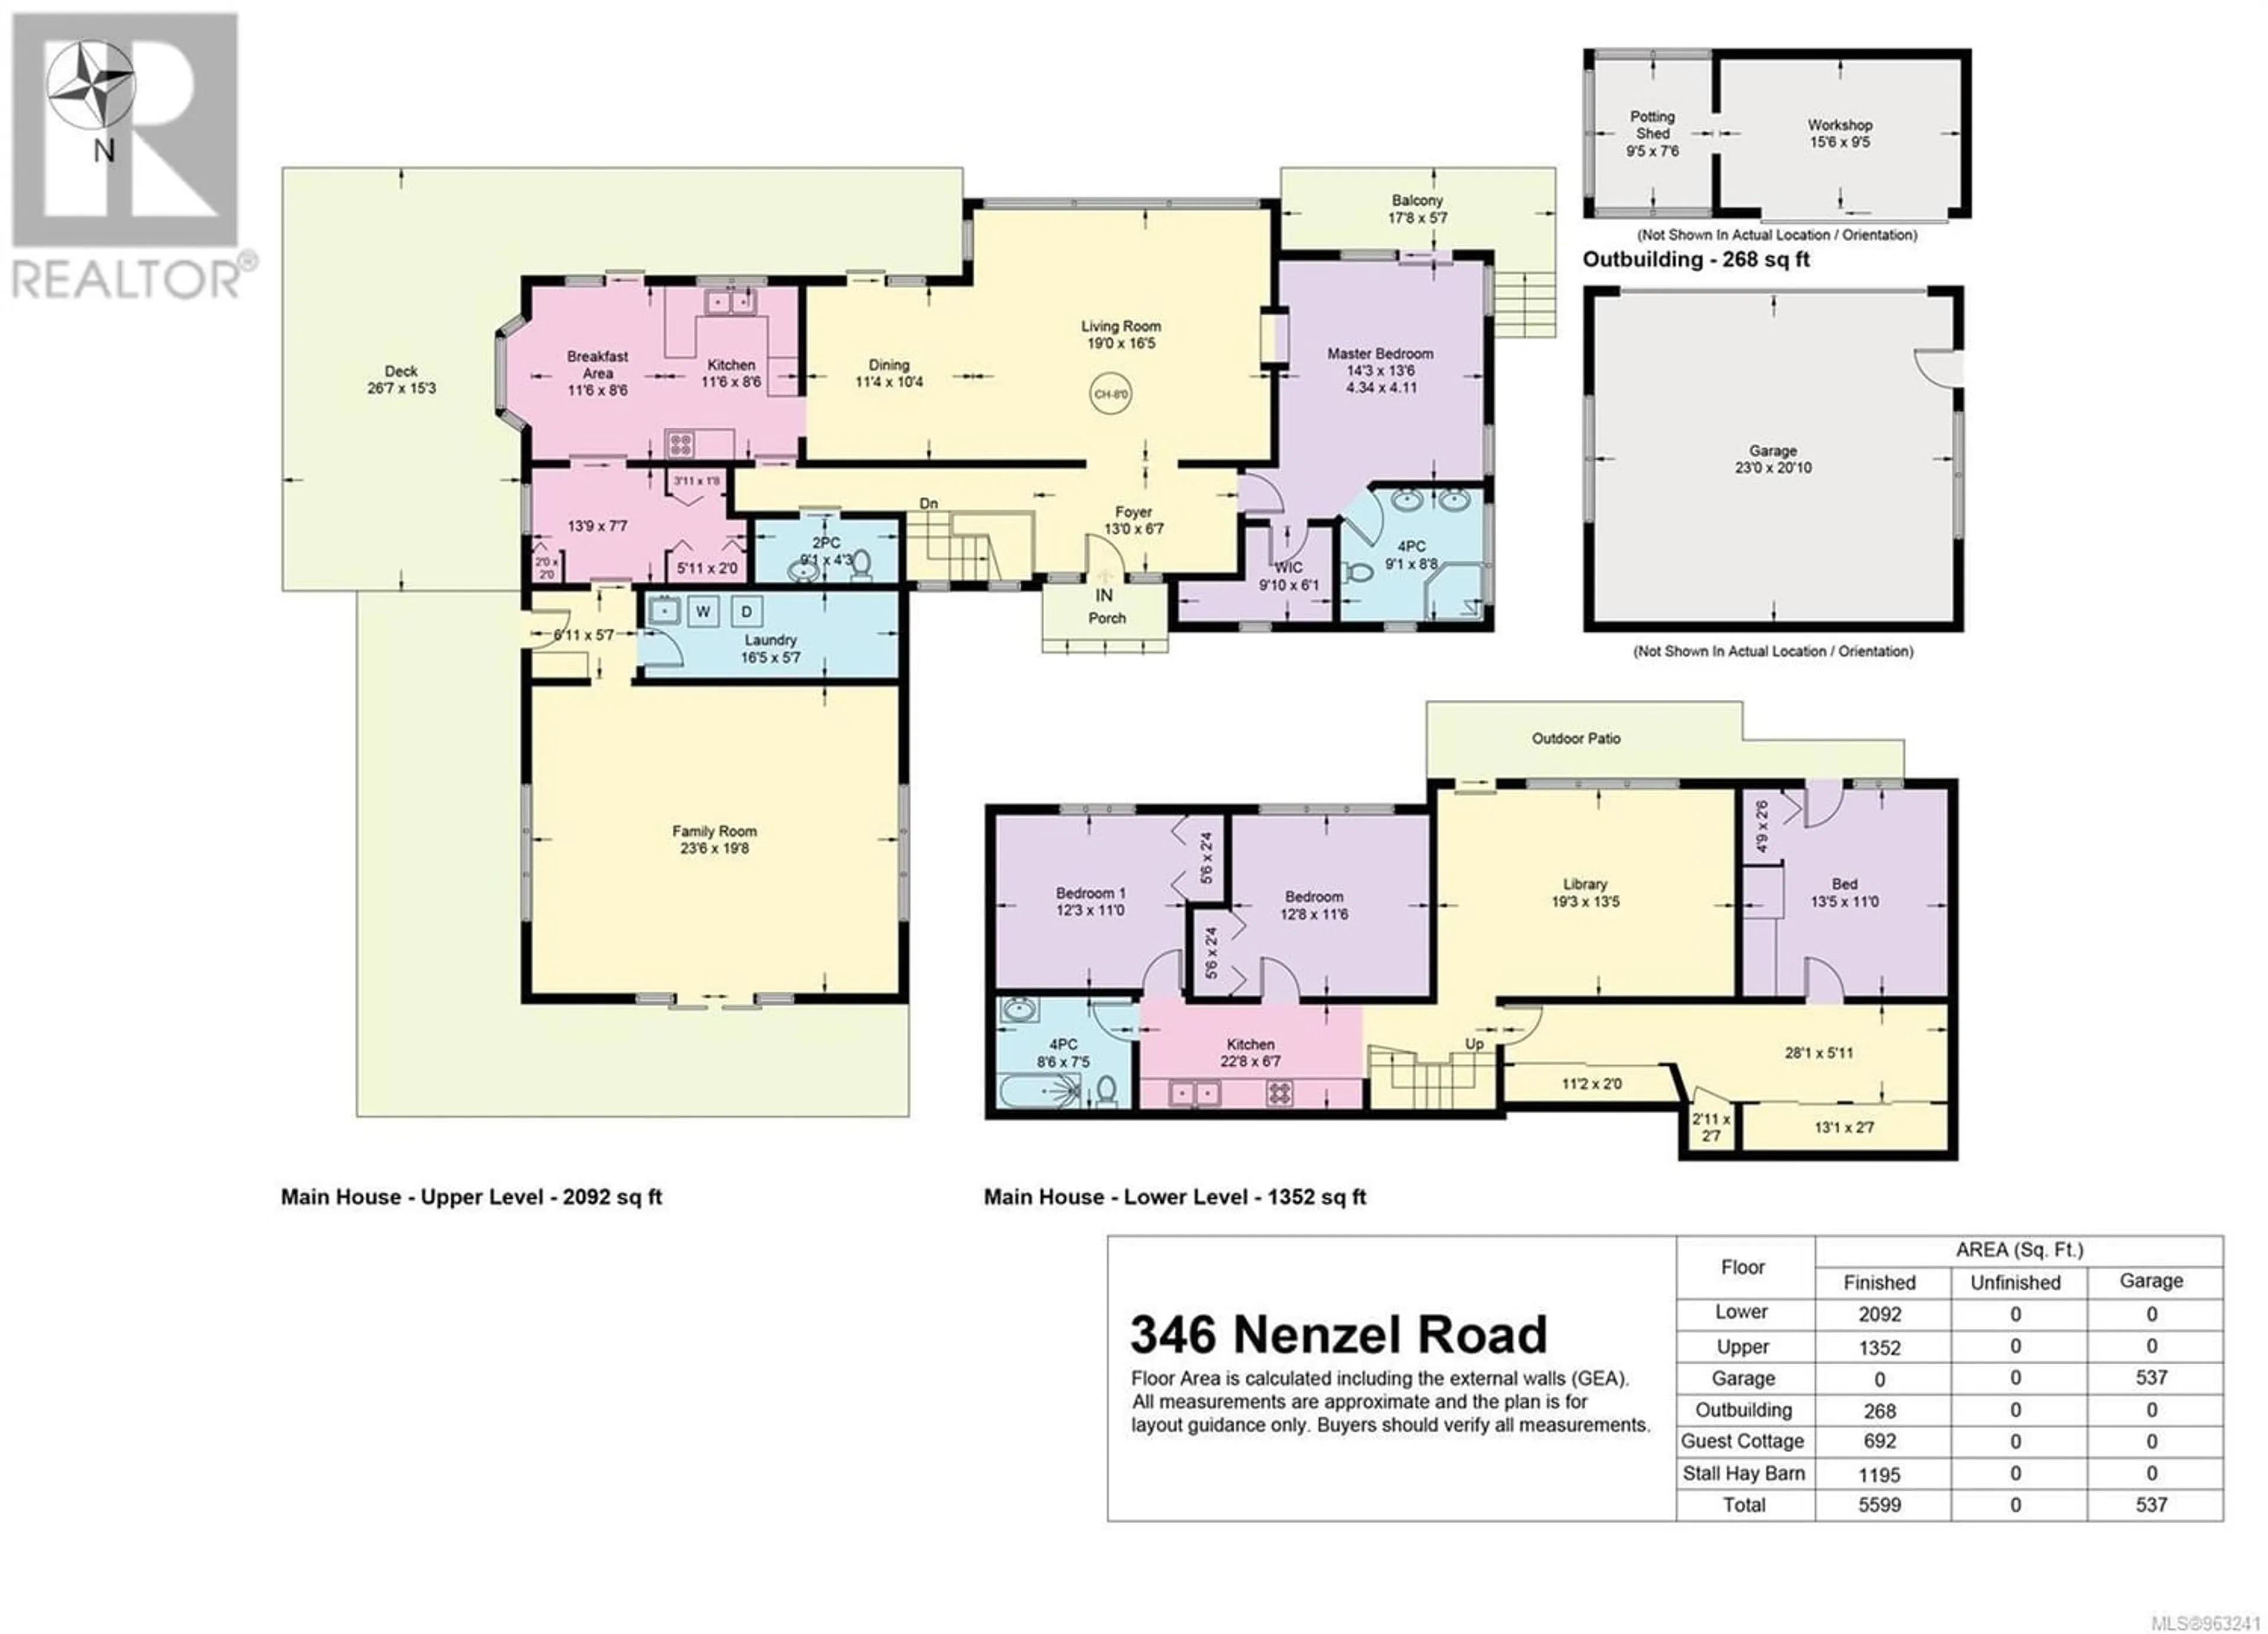 Floor plan for 346/370 Nenzel Rd, Qualicum Beach British Columbia V9K1M5